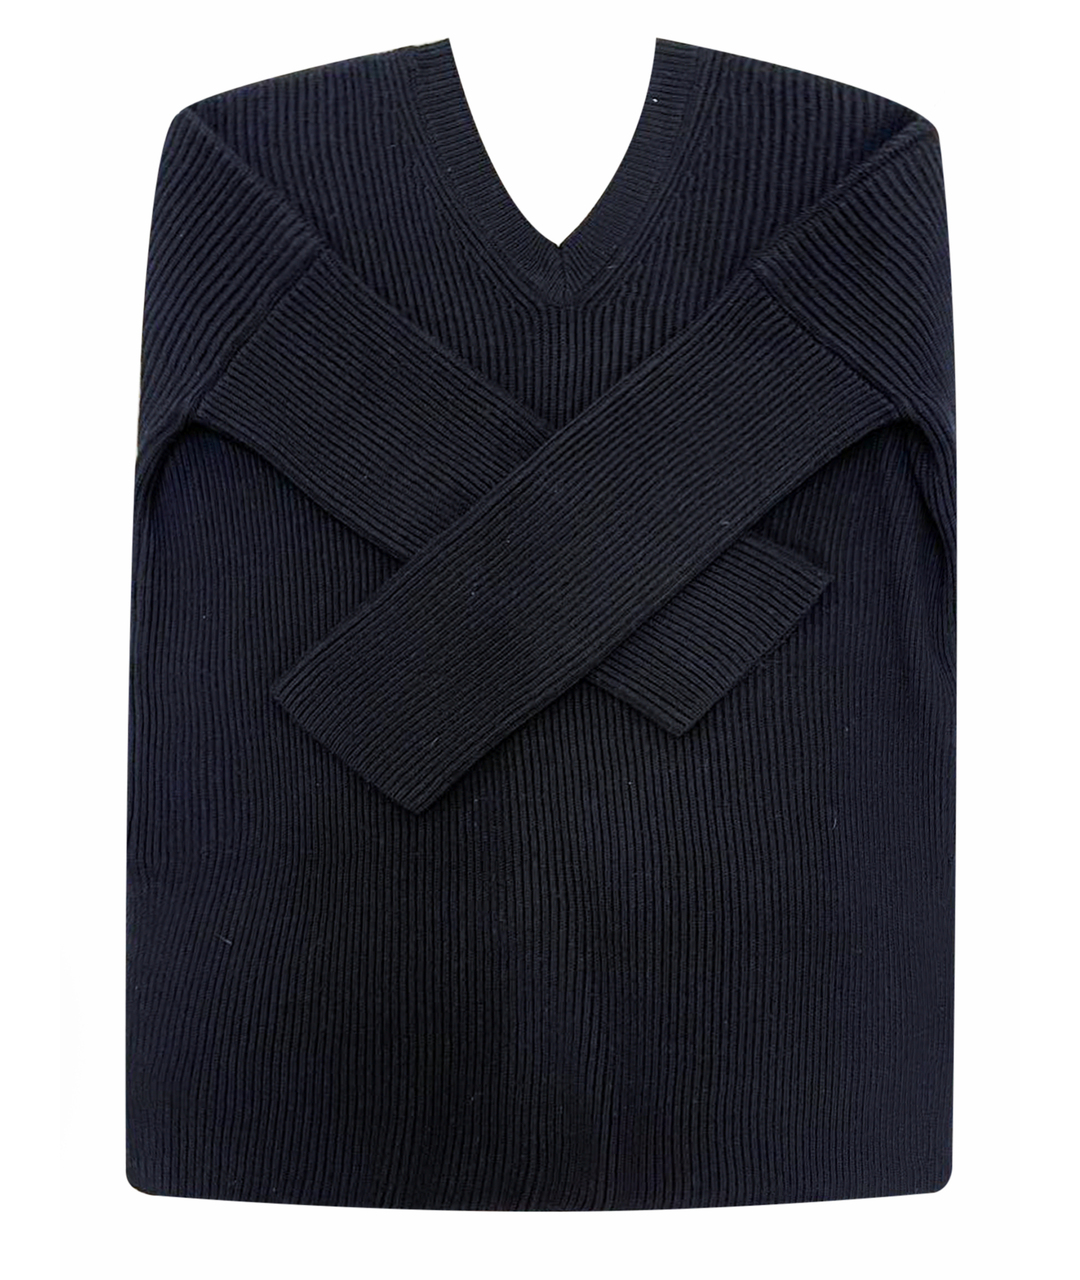 STELLA MCCARTNEY Темно-синий шерстяной джемпер / свитер, фото 1